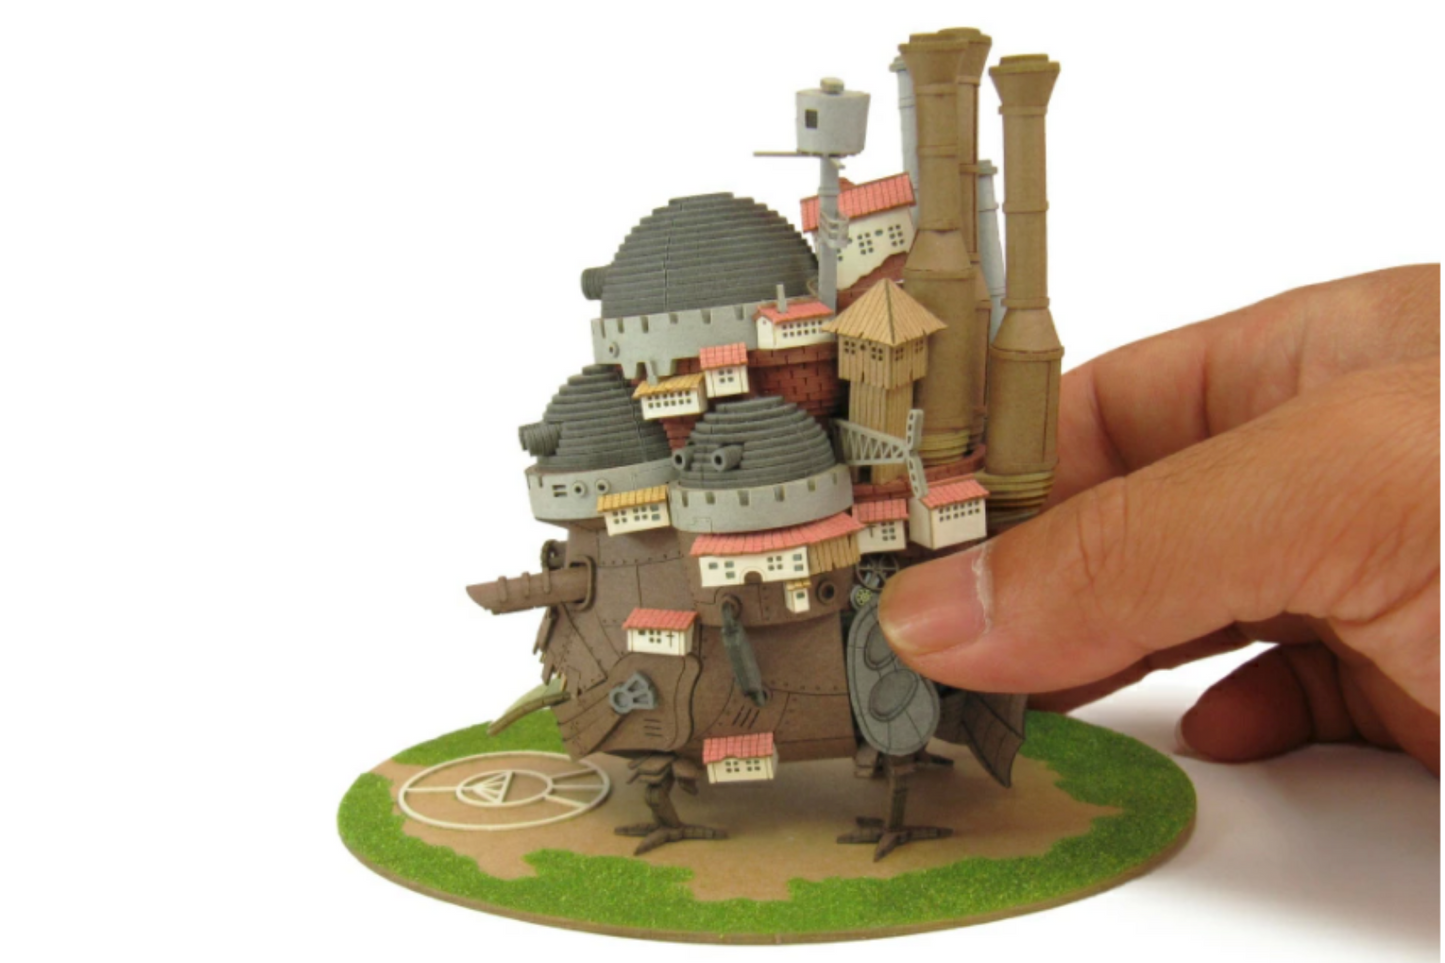 Miniatuart  Howl's Moving Castle: Howl and Sophie Run Away – Bento&co